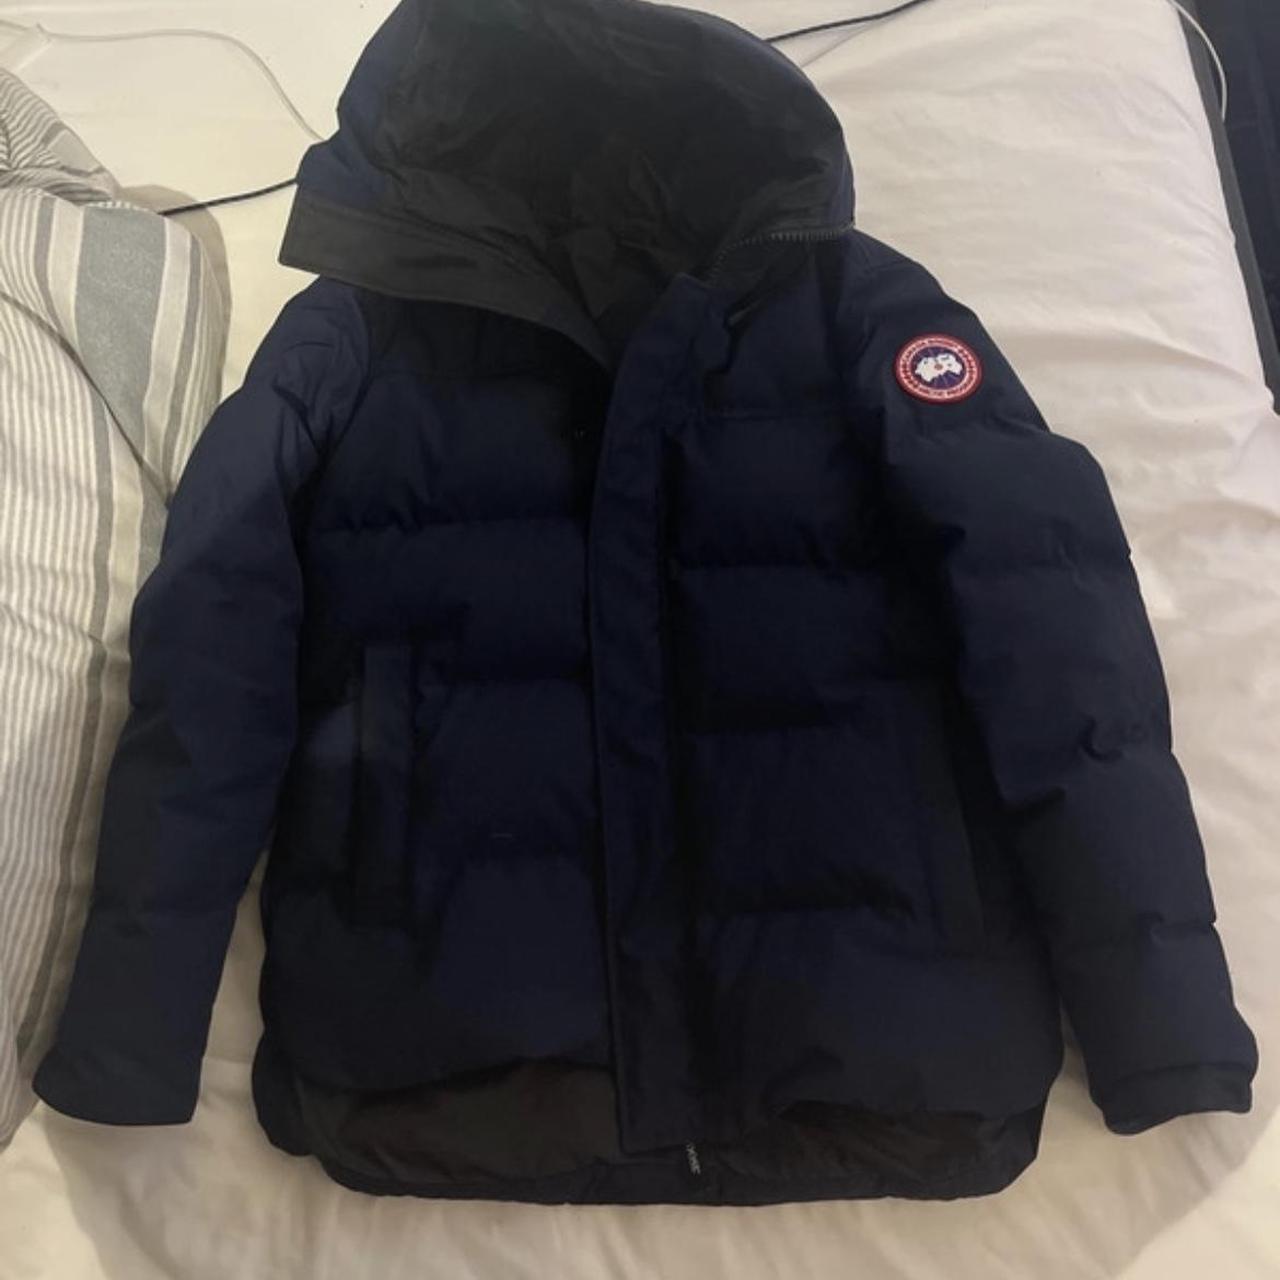 Canada goose parka jacket Size medium will fit a... - Depop